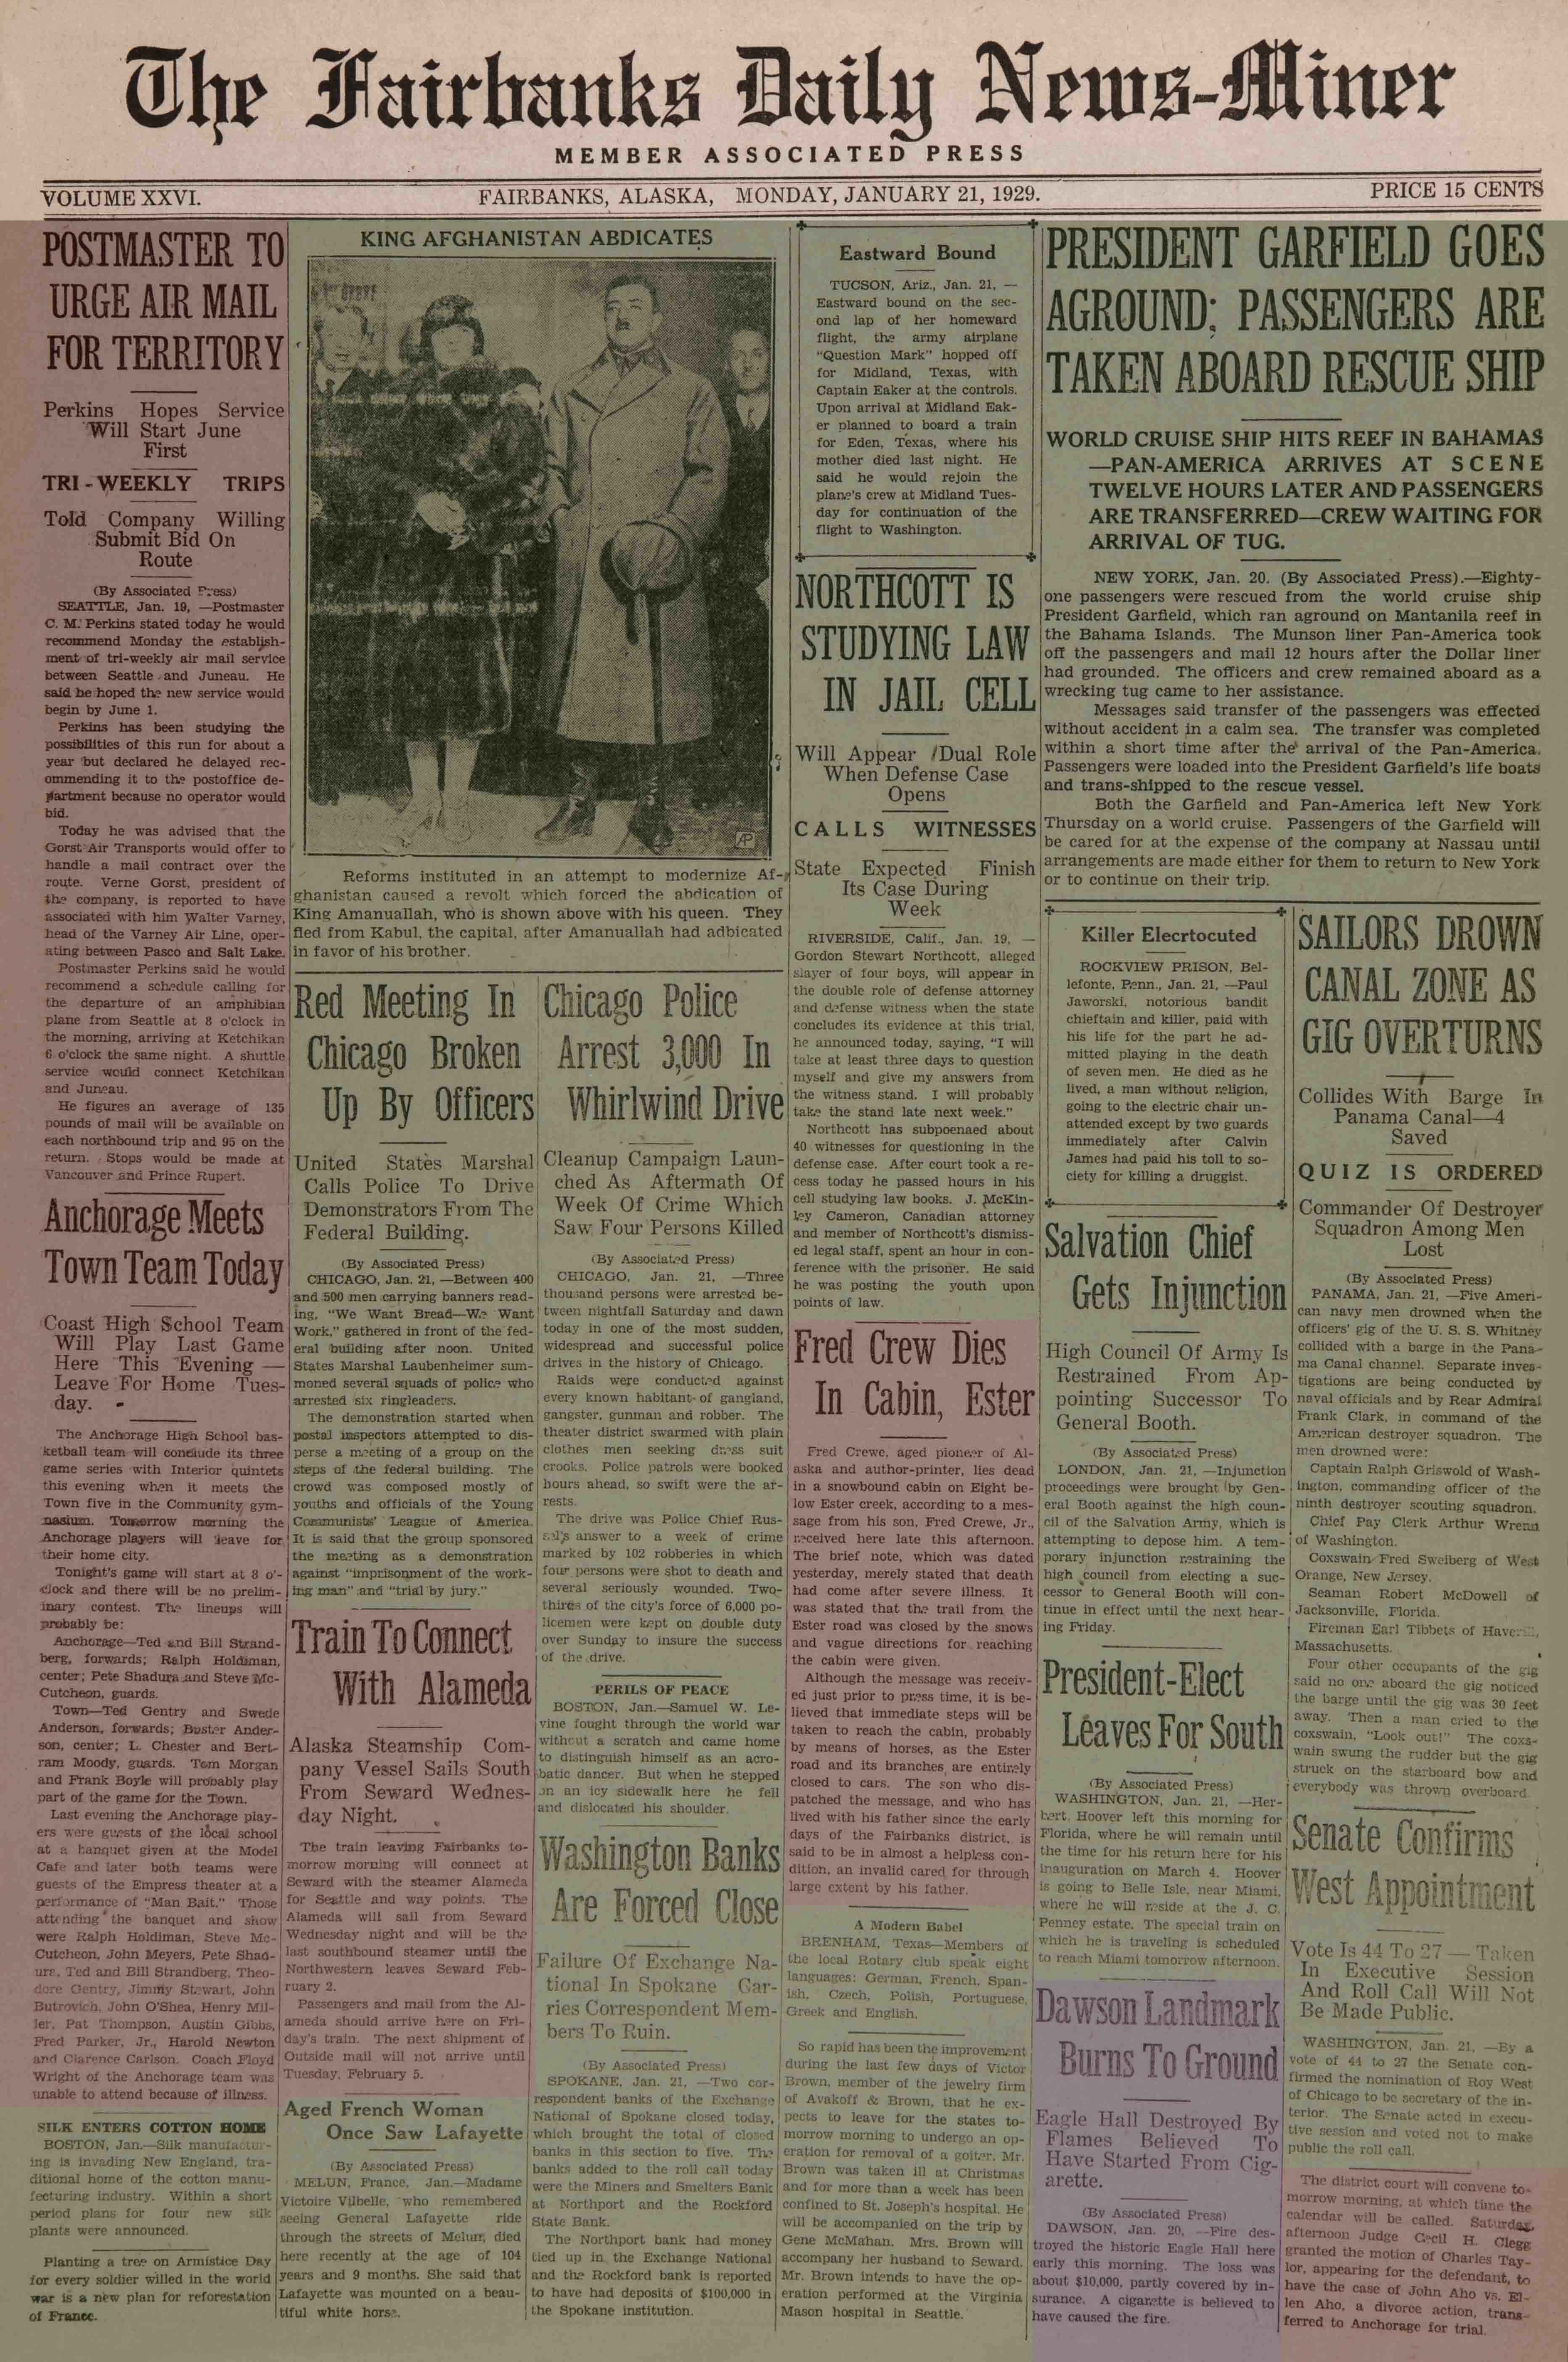 1929 January 21, Fairbanks Daily News-Miner (pg 1)